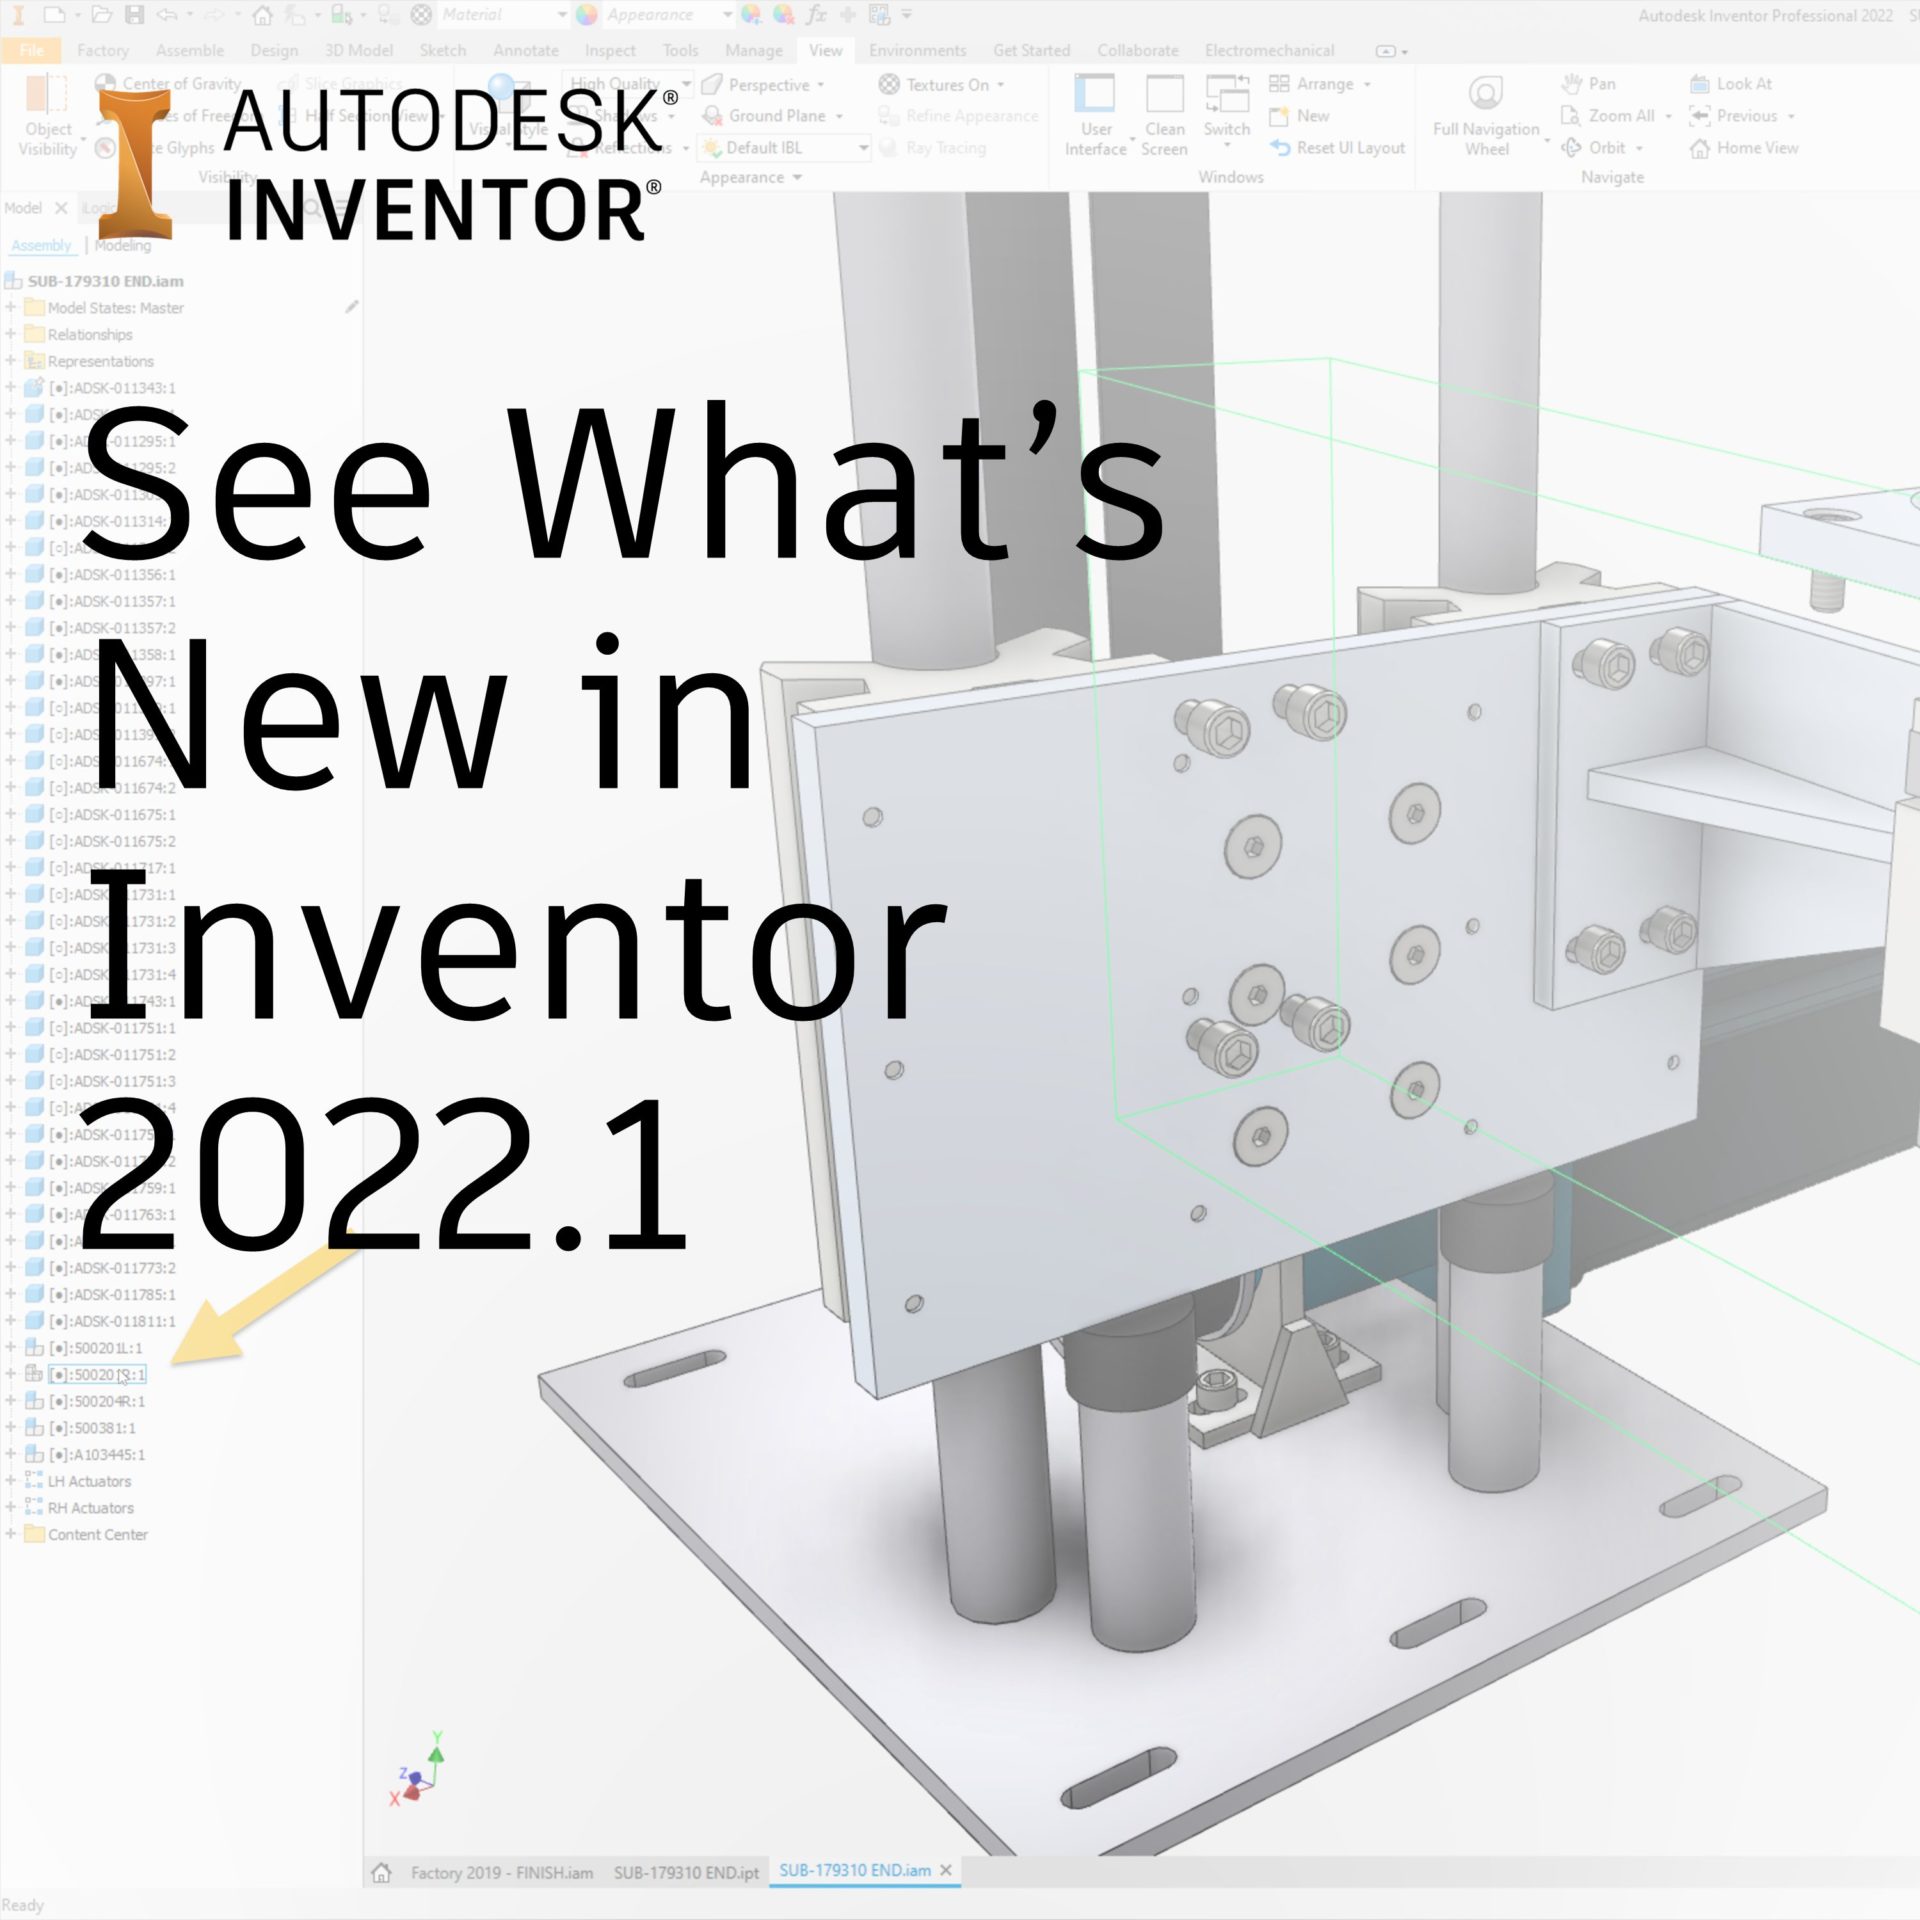 Autodesk Inventor update